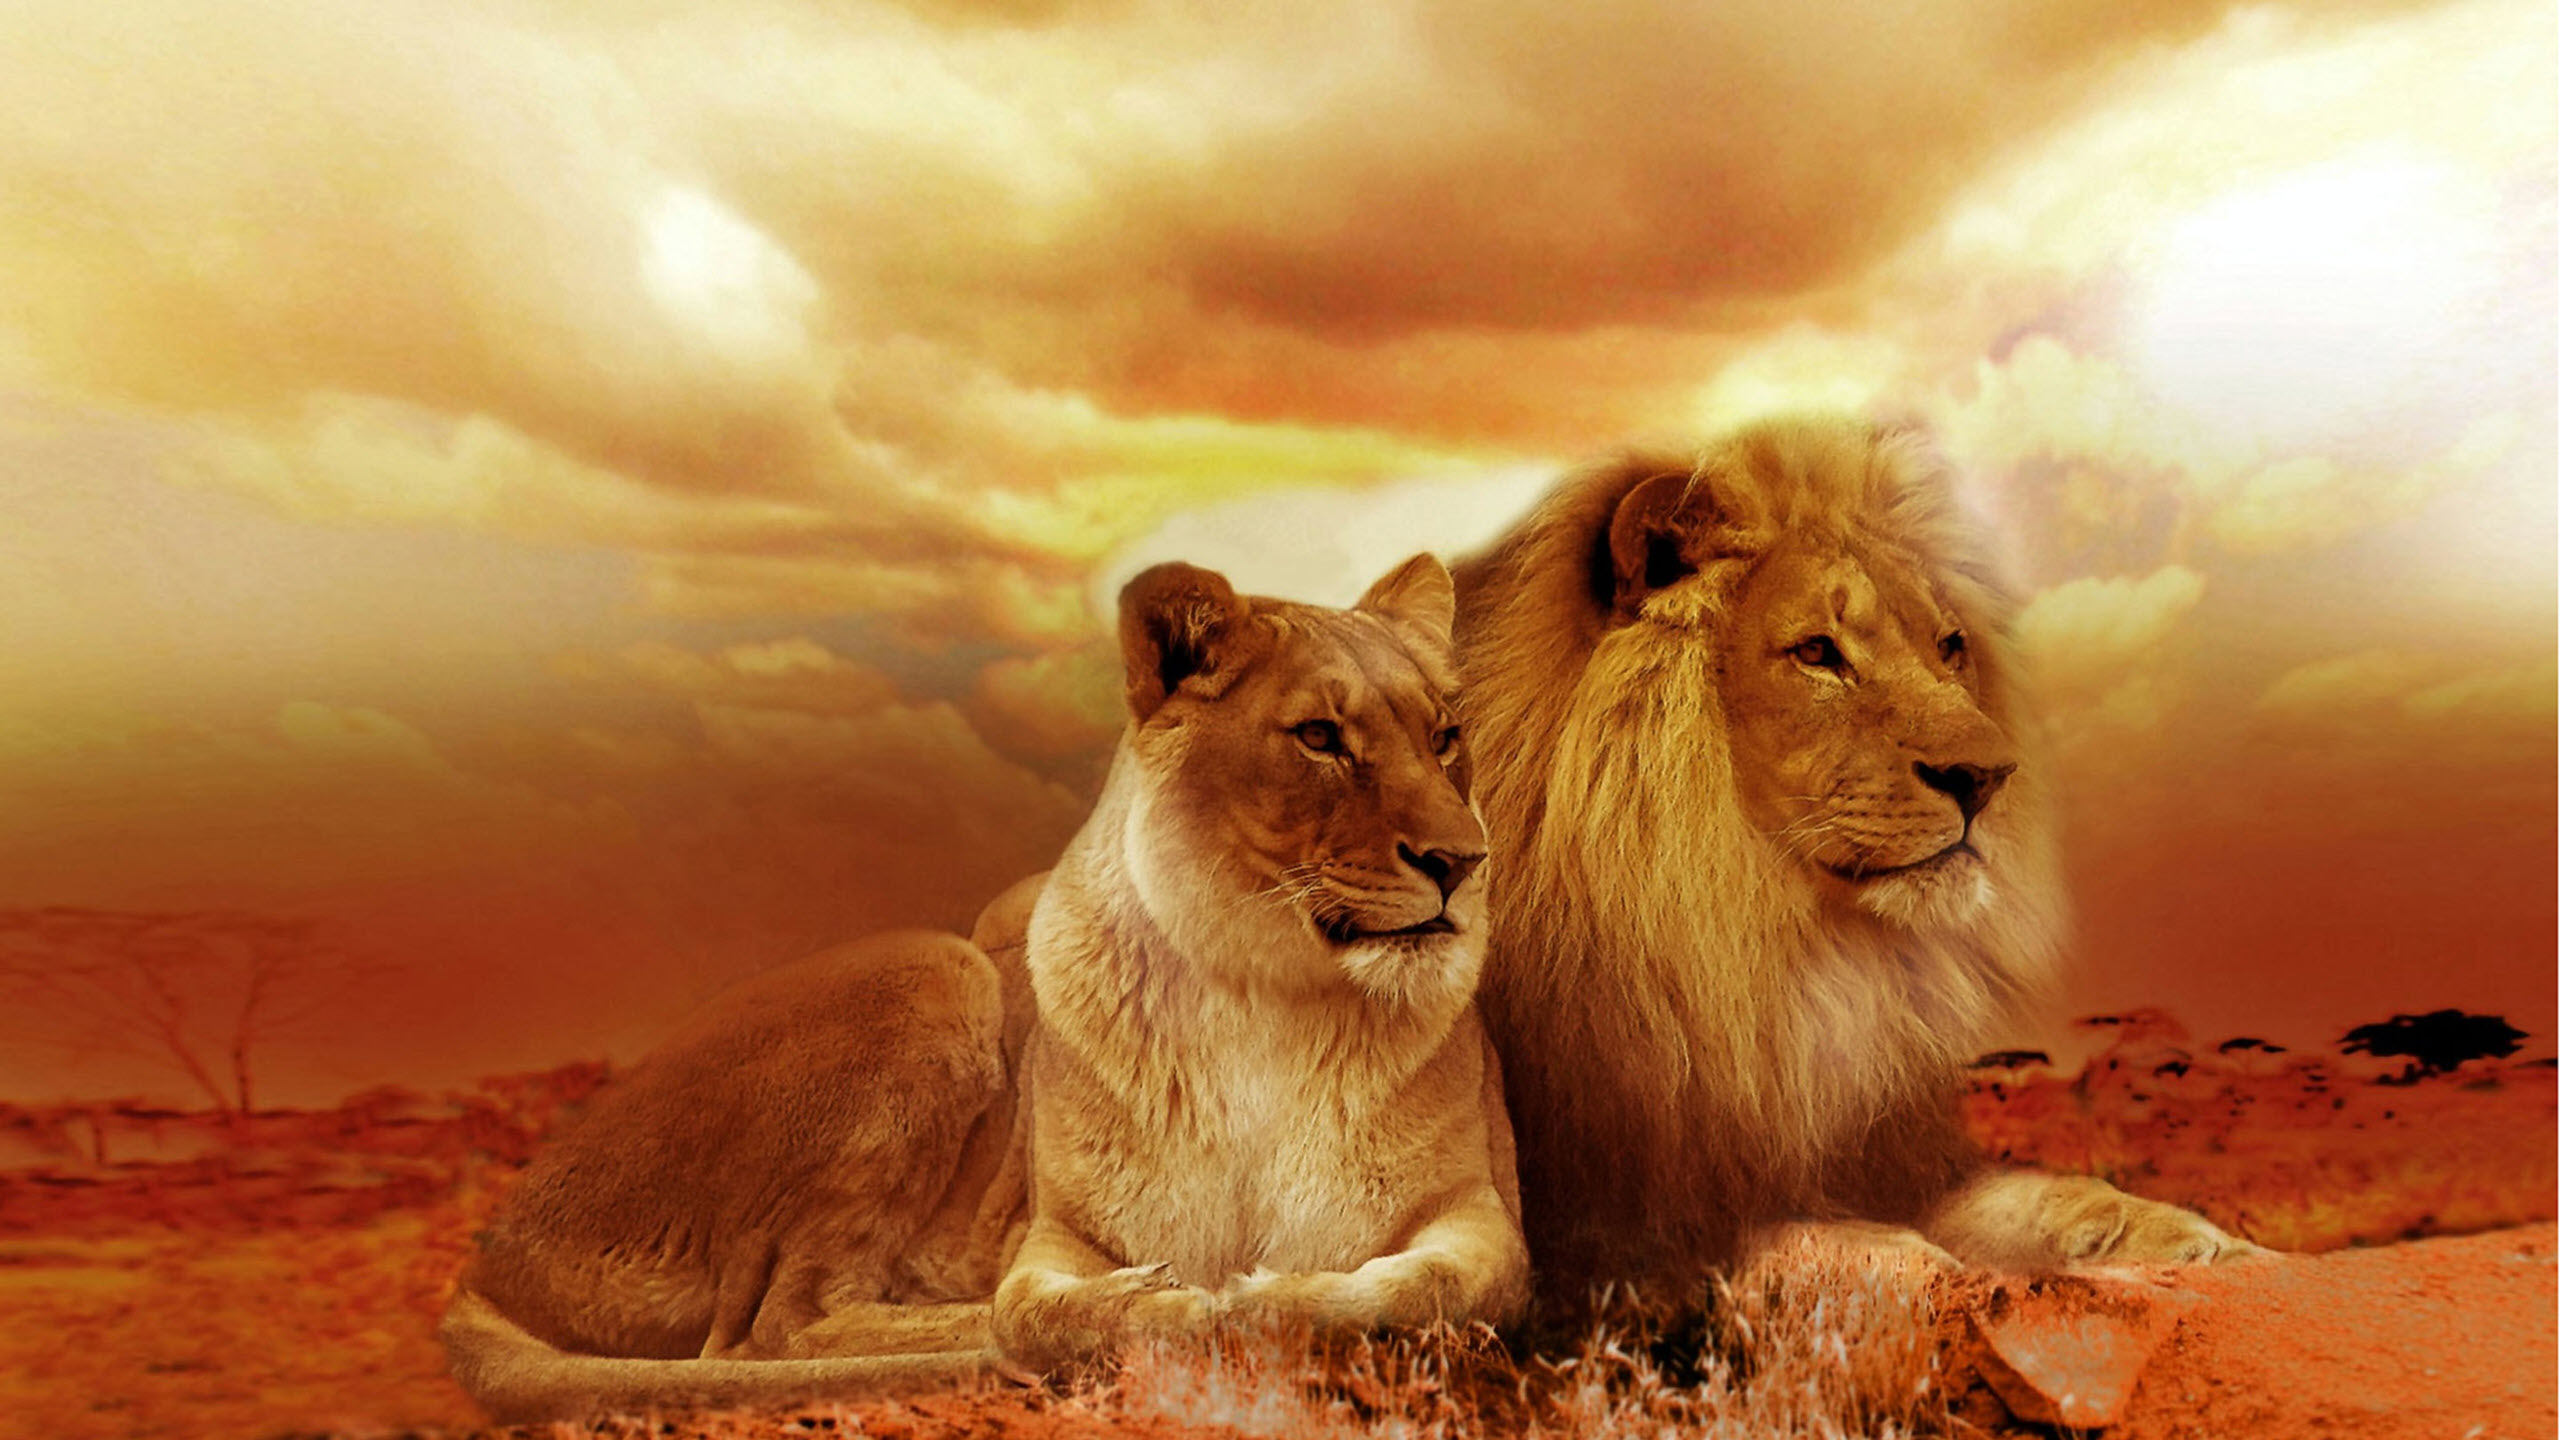 50 hình ảnh cung Sư Tử đẹp nhất | Fire lion, Lion, Lion pictures